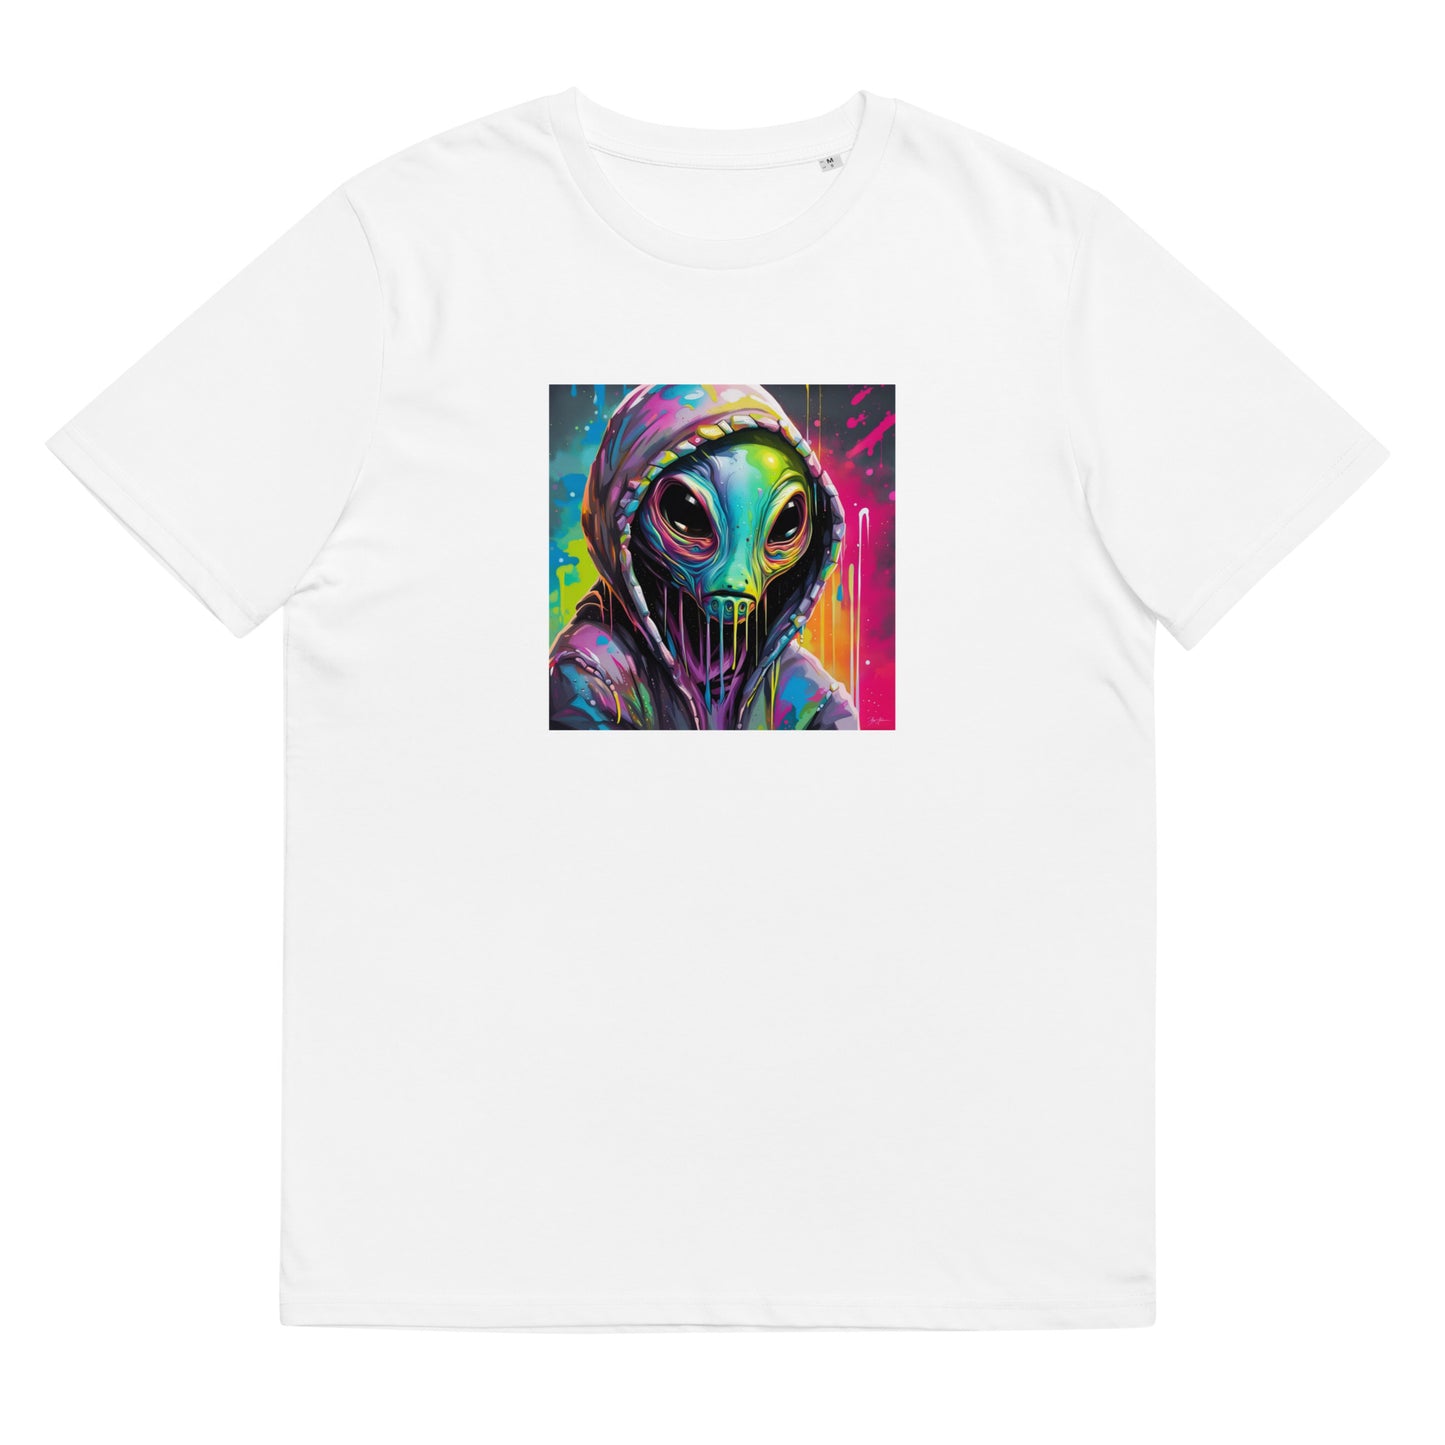 Unisex organic cotton t-shirt feat Hooded alien creature, by Nft_sellmaker